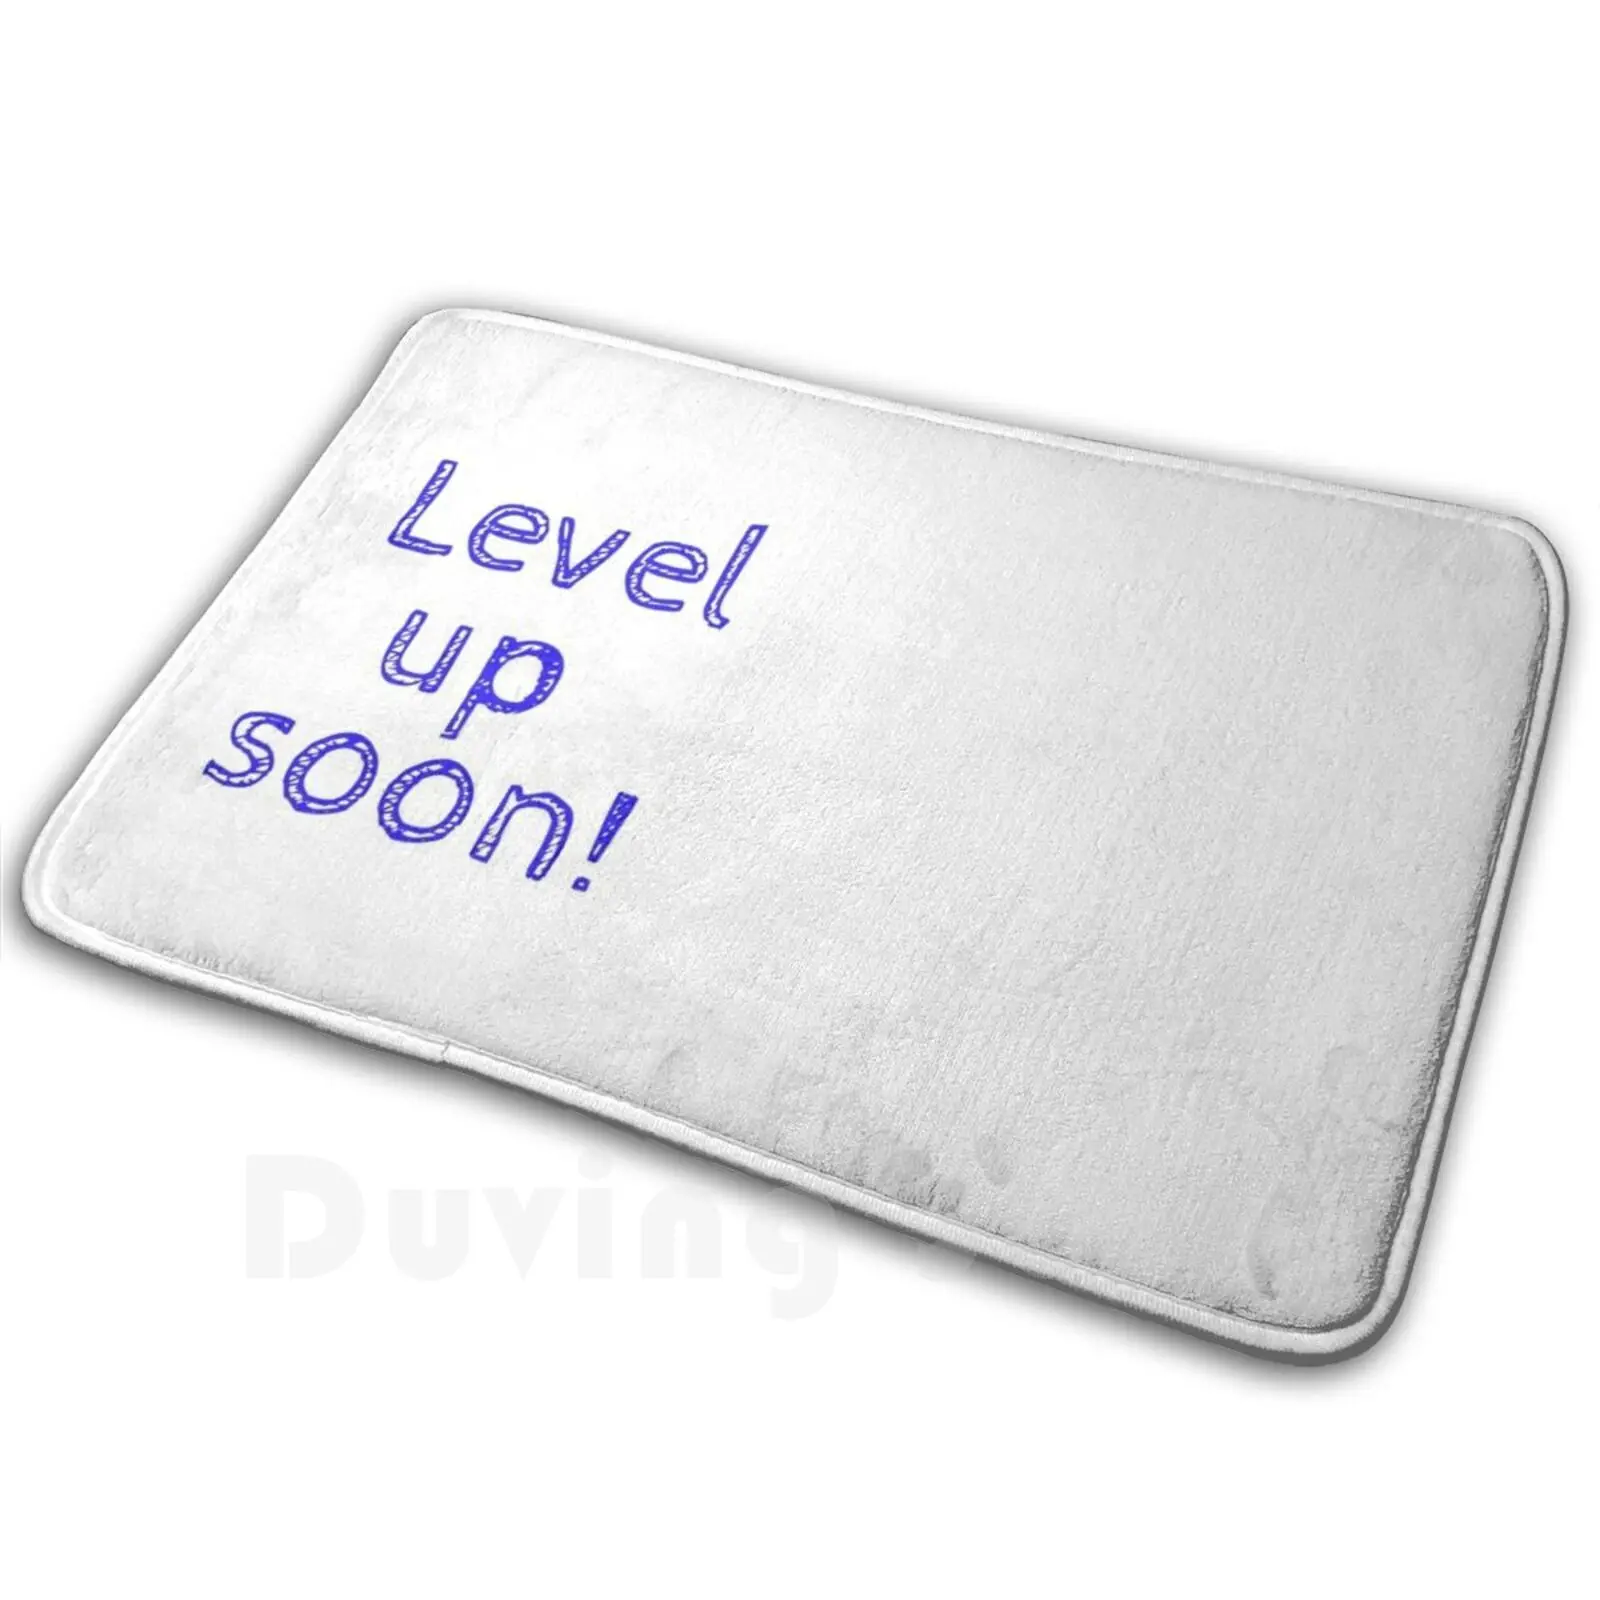 Level Up Soon! Carpet Mat Rug Cushion Soft Non-Slip Level Up Soon Level Stand Up Speak Up Voice Ages Juniors Funds